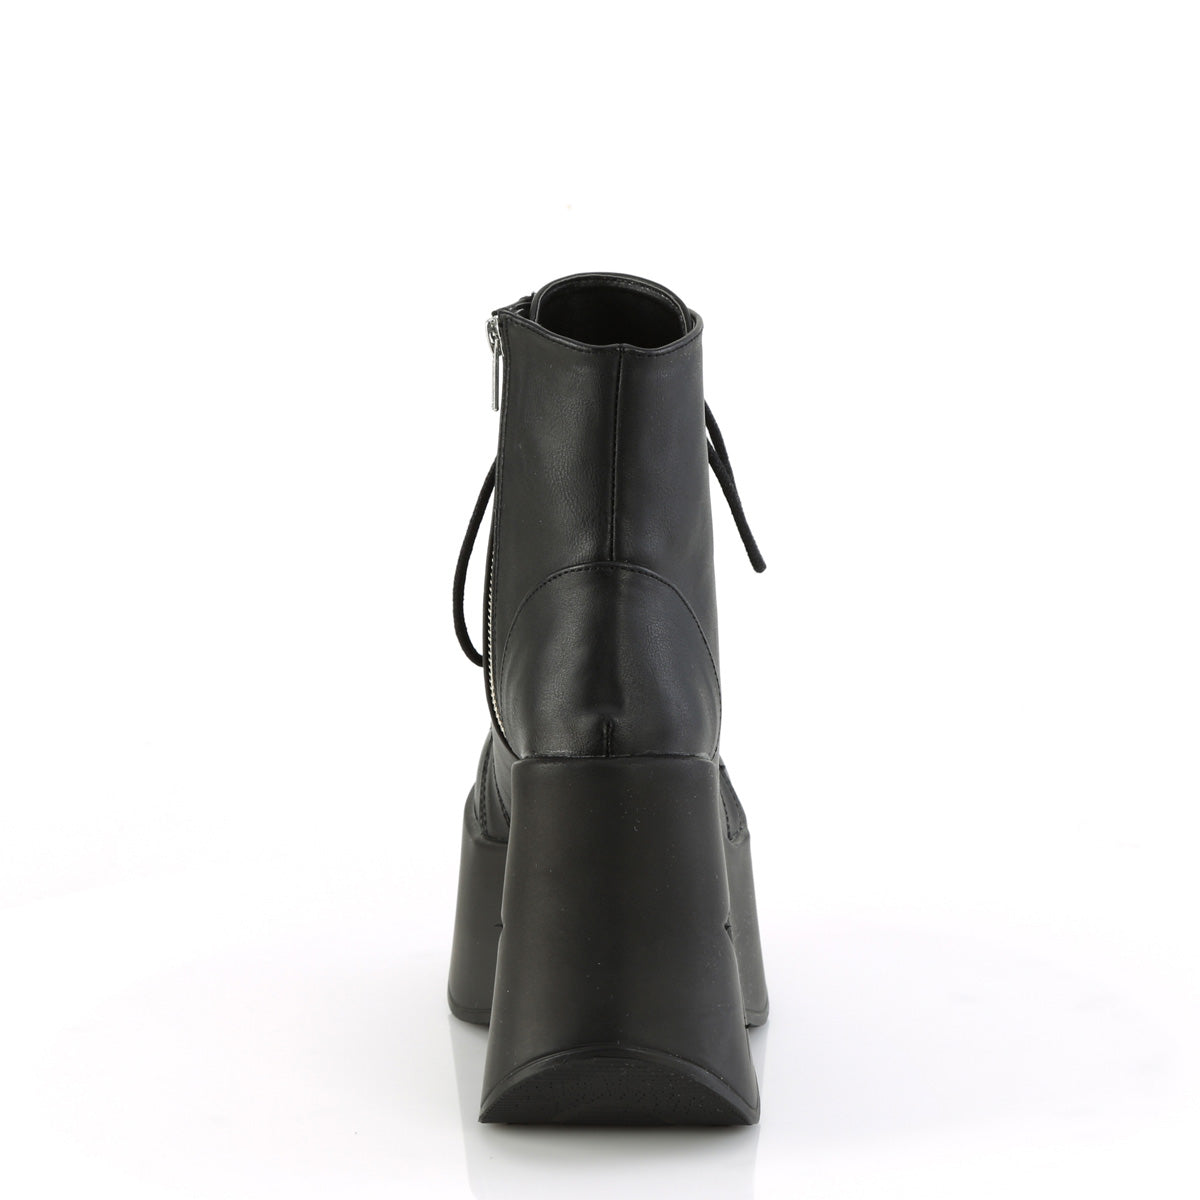 DYNAMITE-106 Demonia Black Vegan Leather Women's Ankle Boots [Demonia Cult Alternative Footwear]